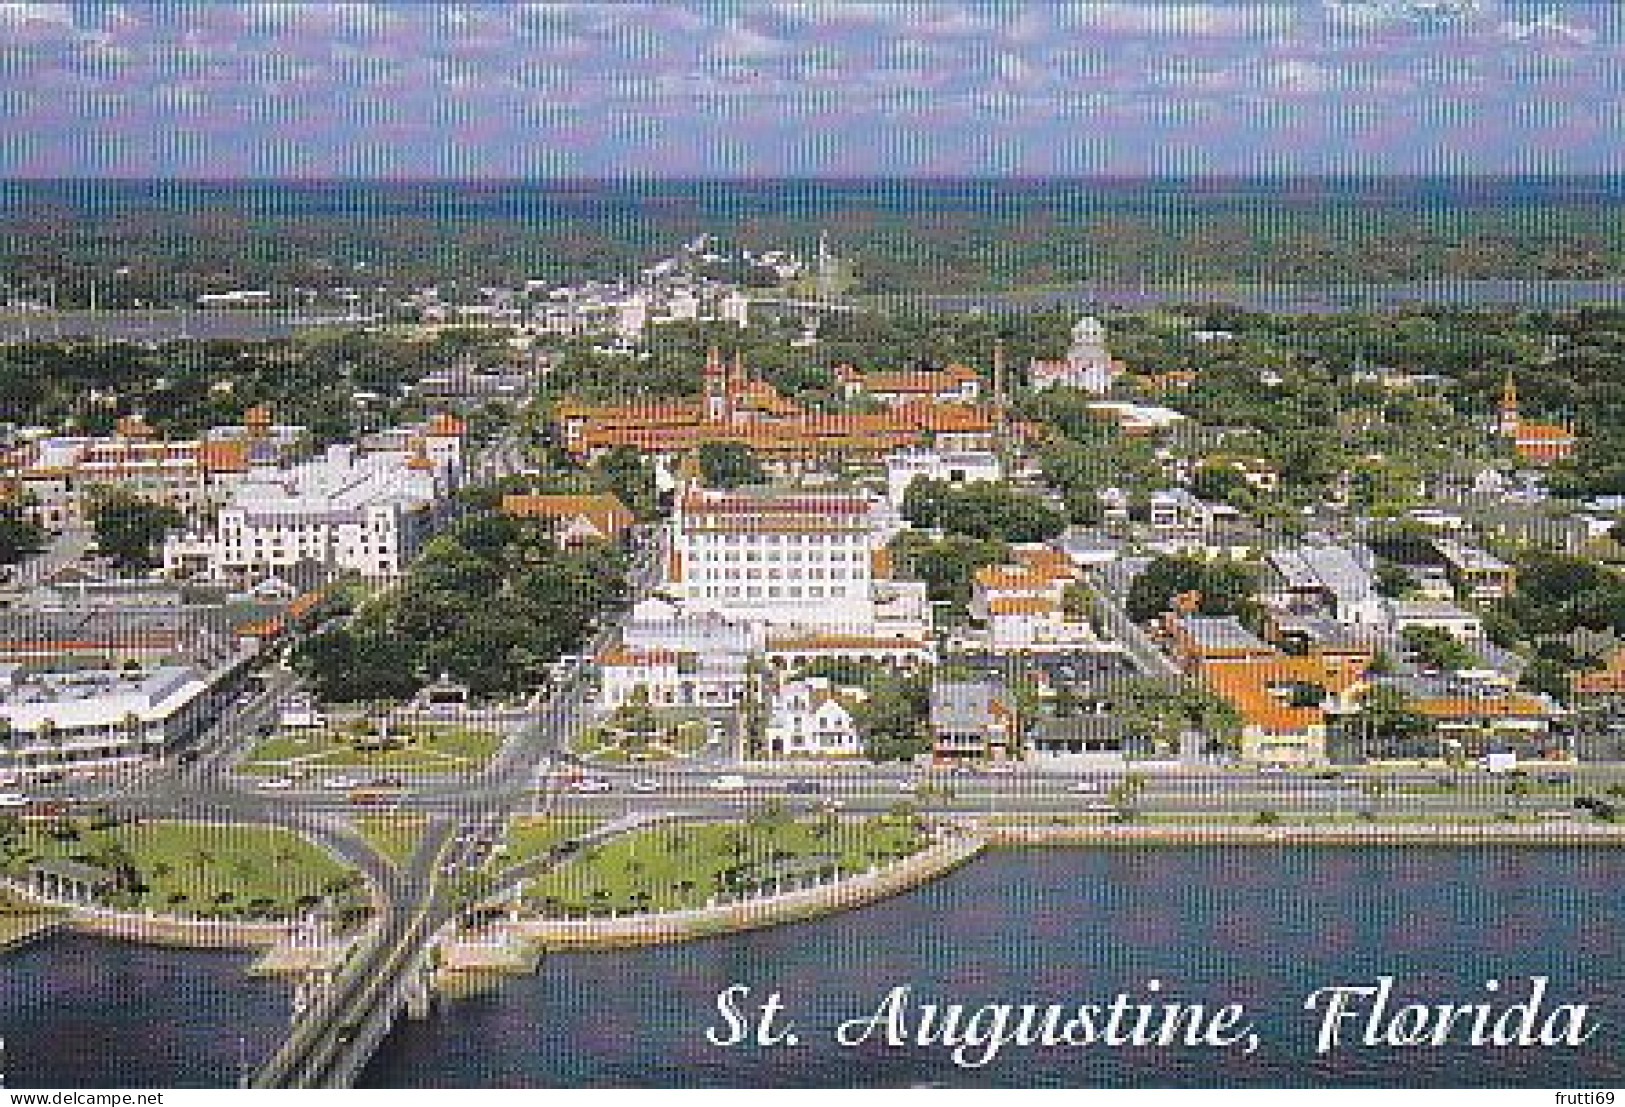 AK 215325 USA - Florida - St. Augustine - St Augustine